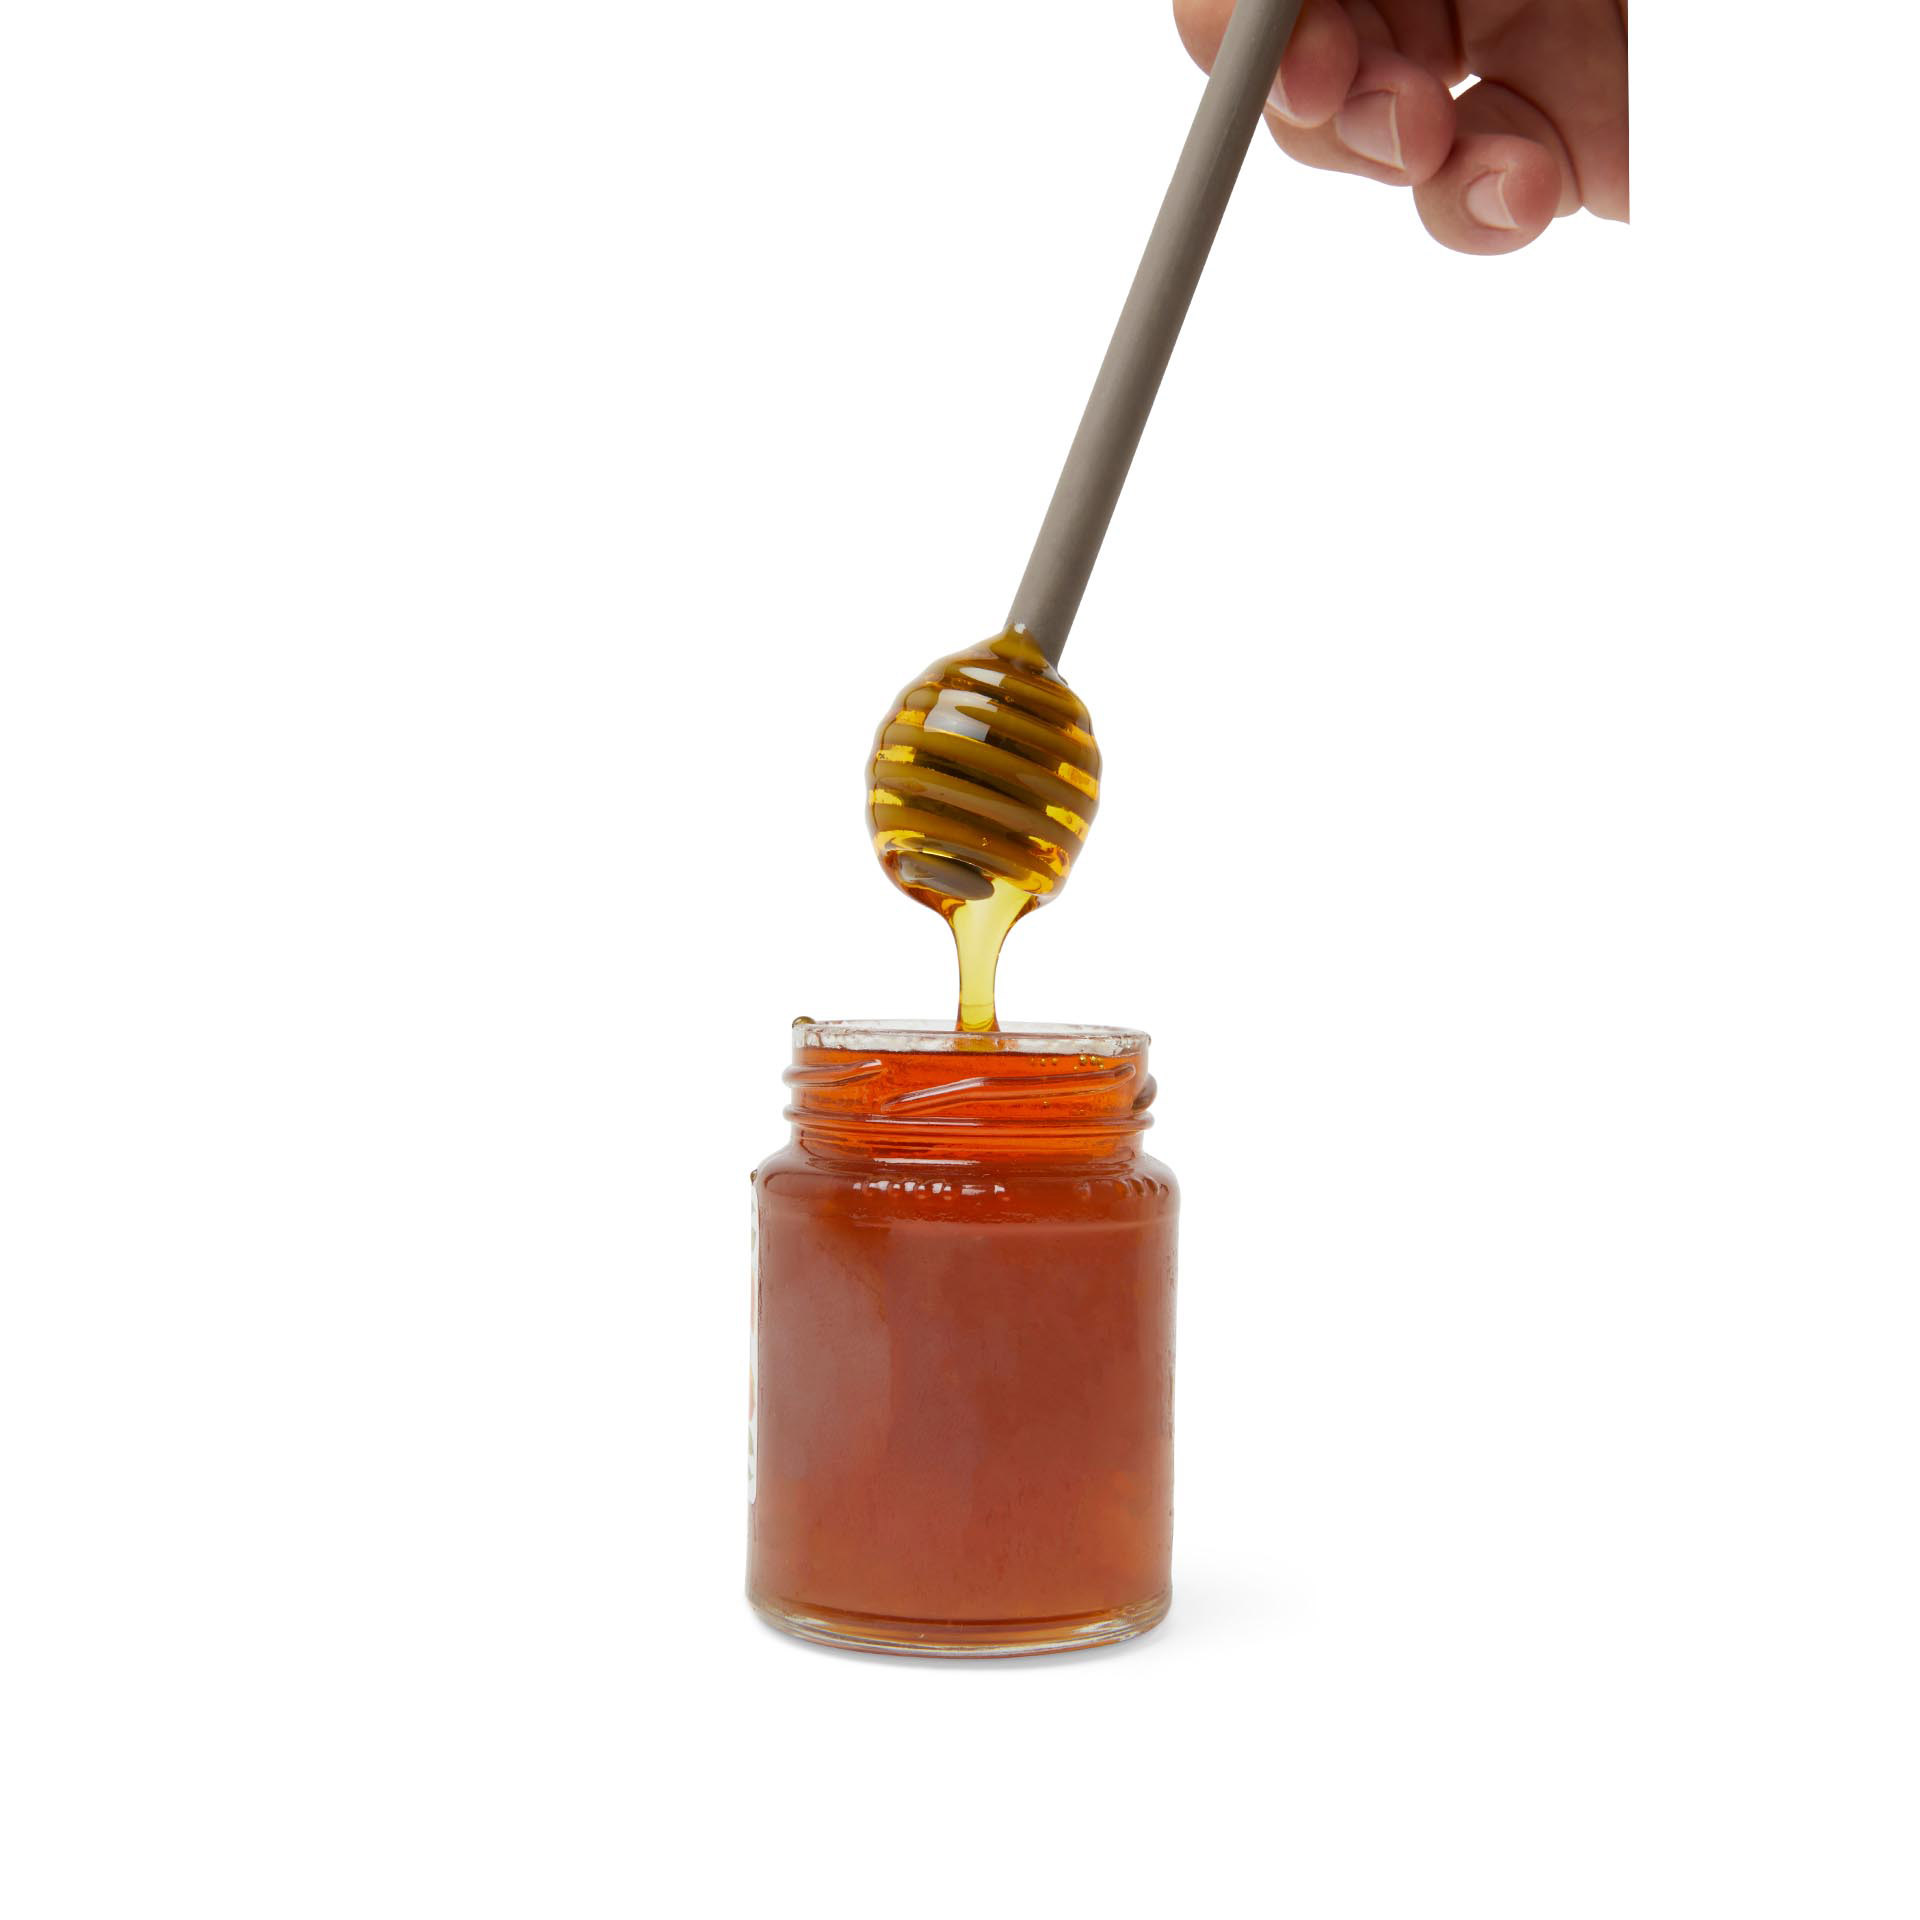 Cucchiaio in silicone per miele